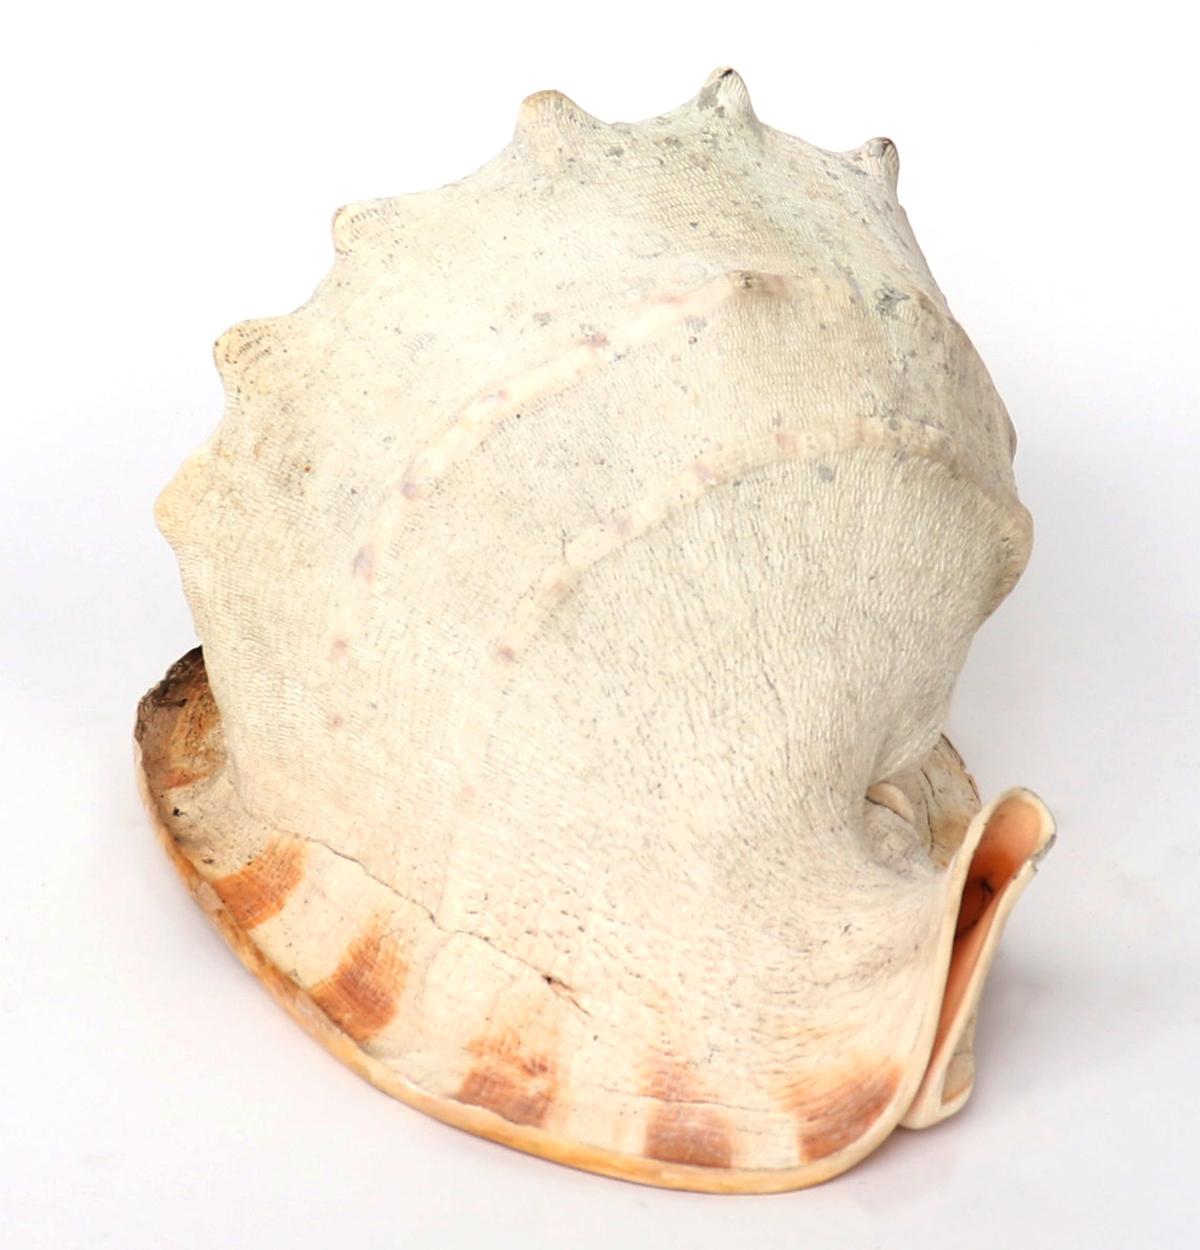 Large Helmet or Emperor Snail Shell